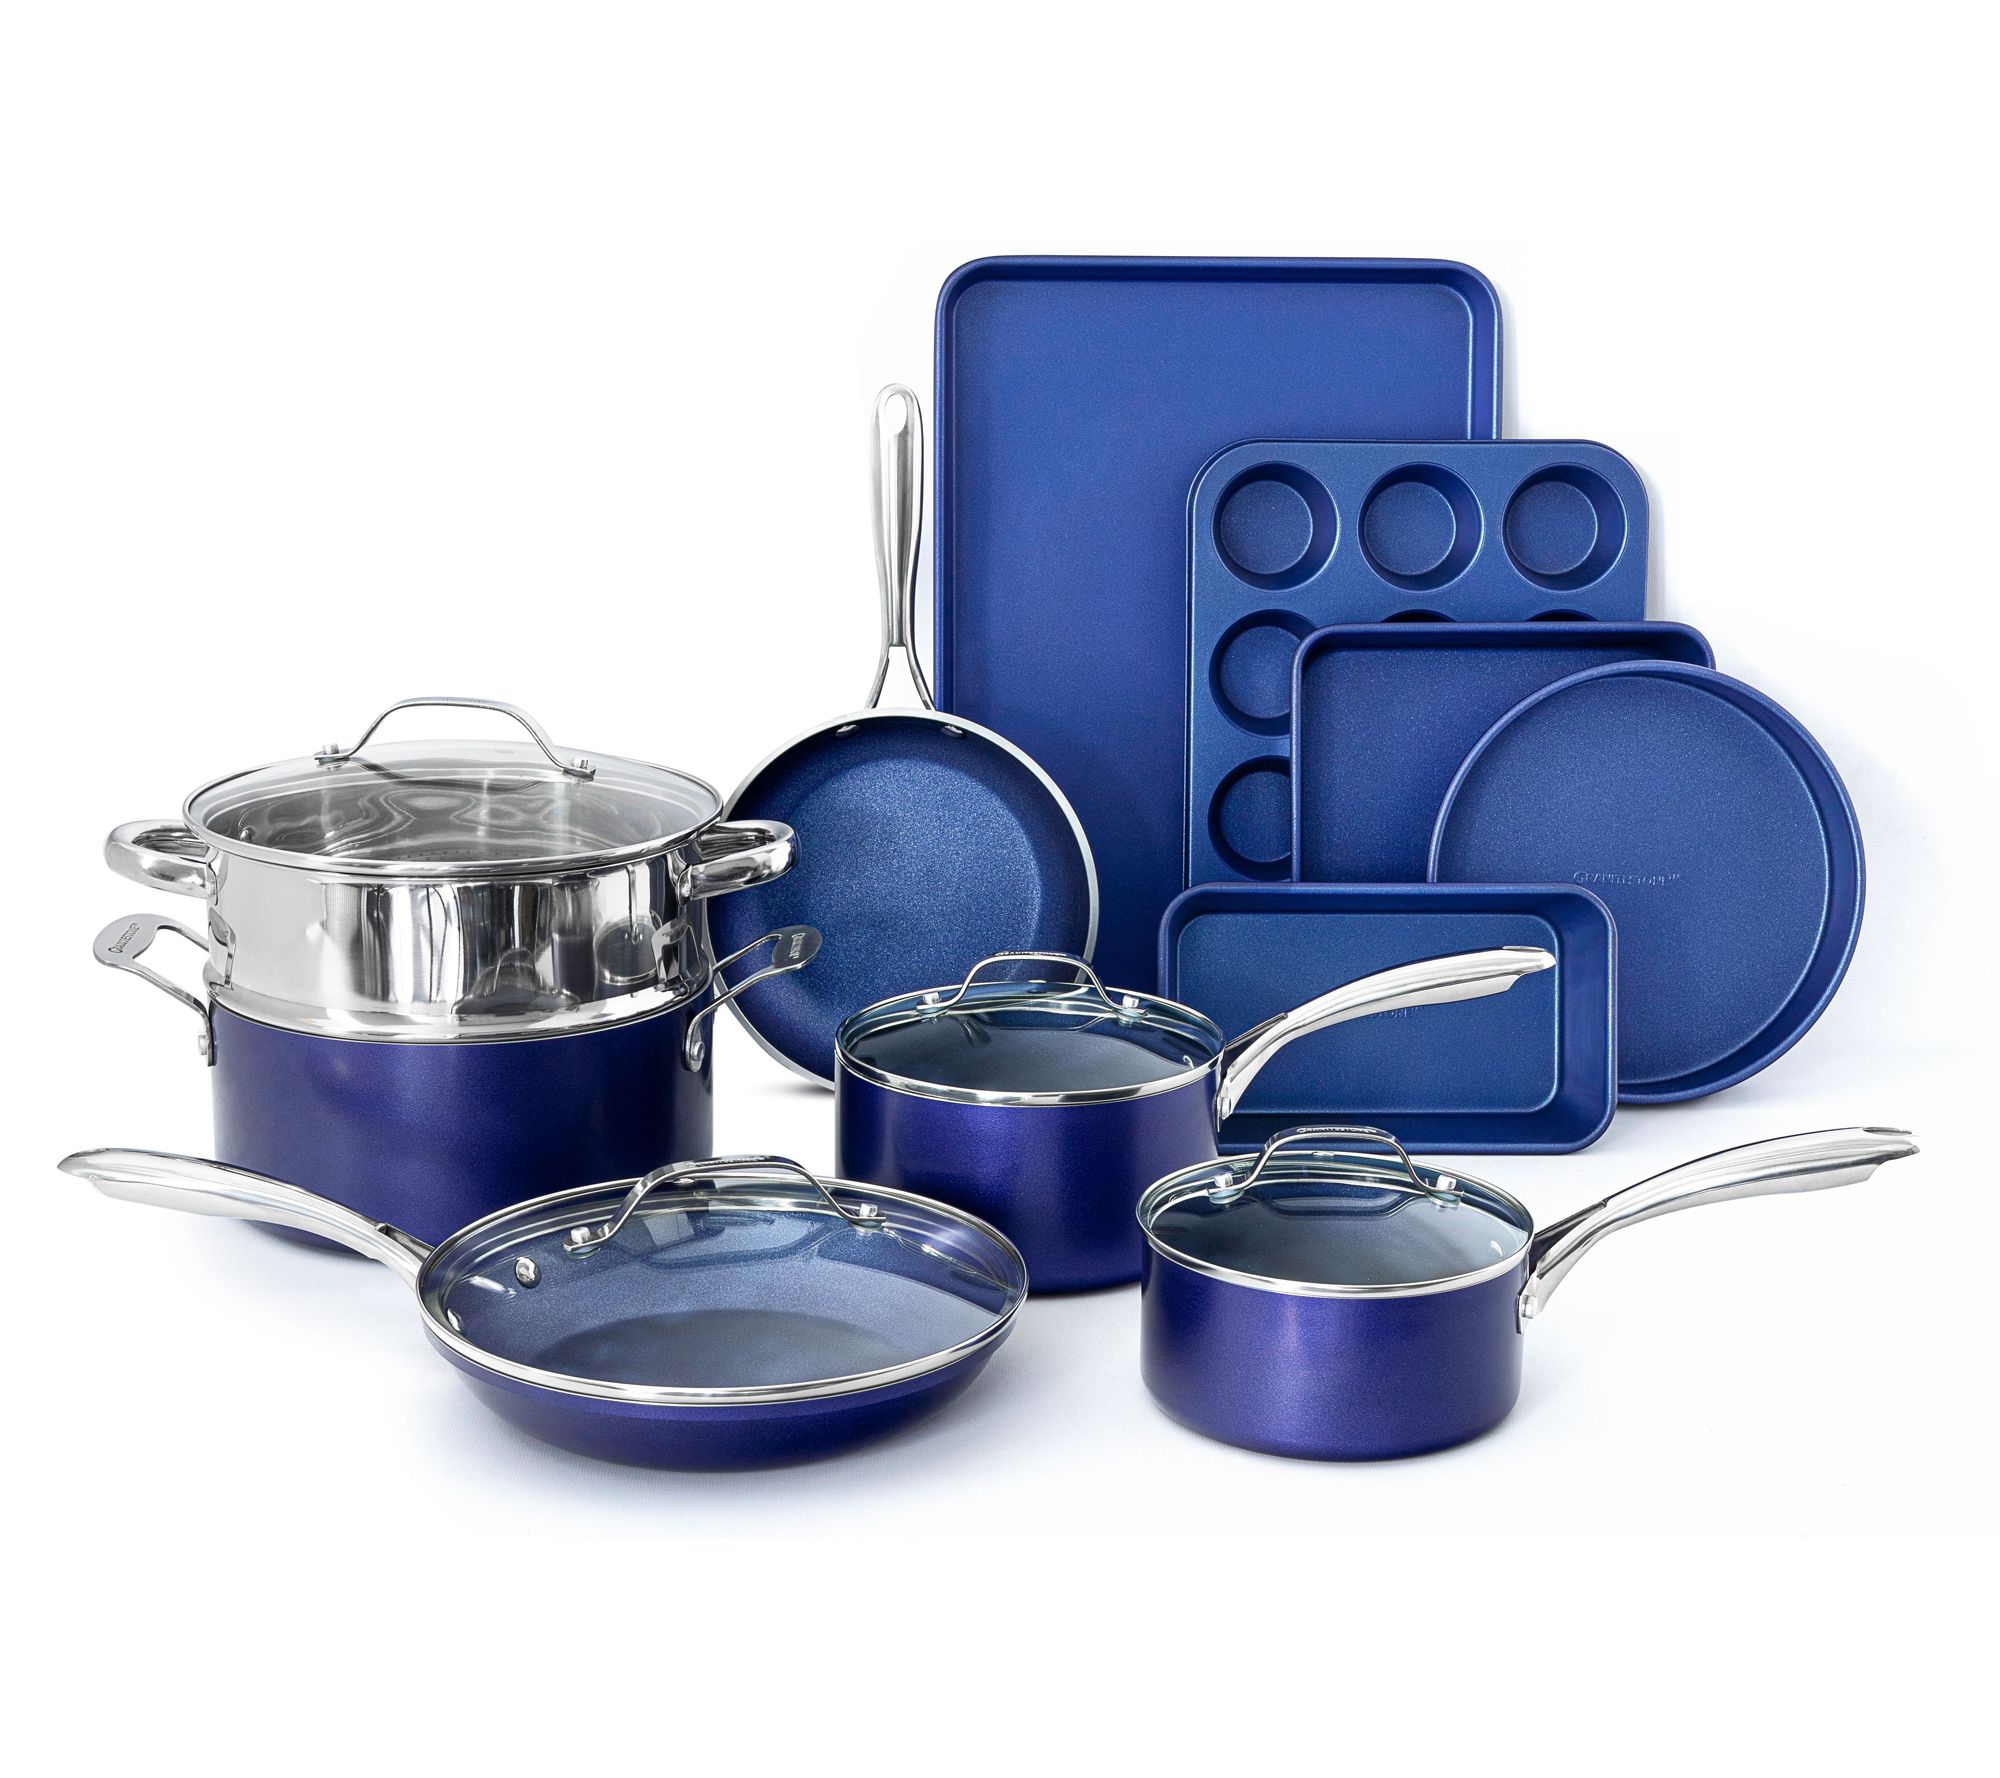 Granitestone Blue Nonstick 15 Piece Cookware and Bakeware Set